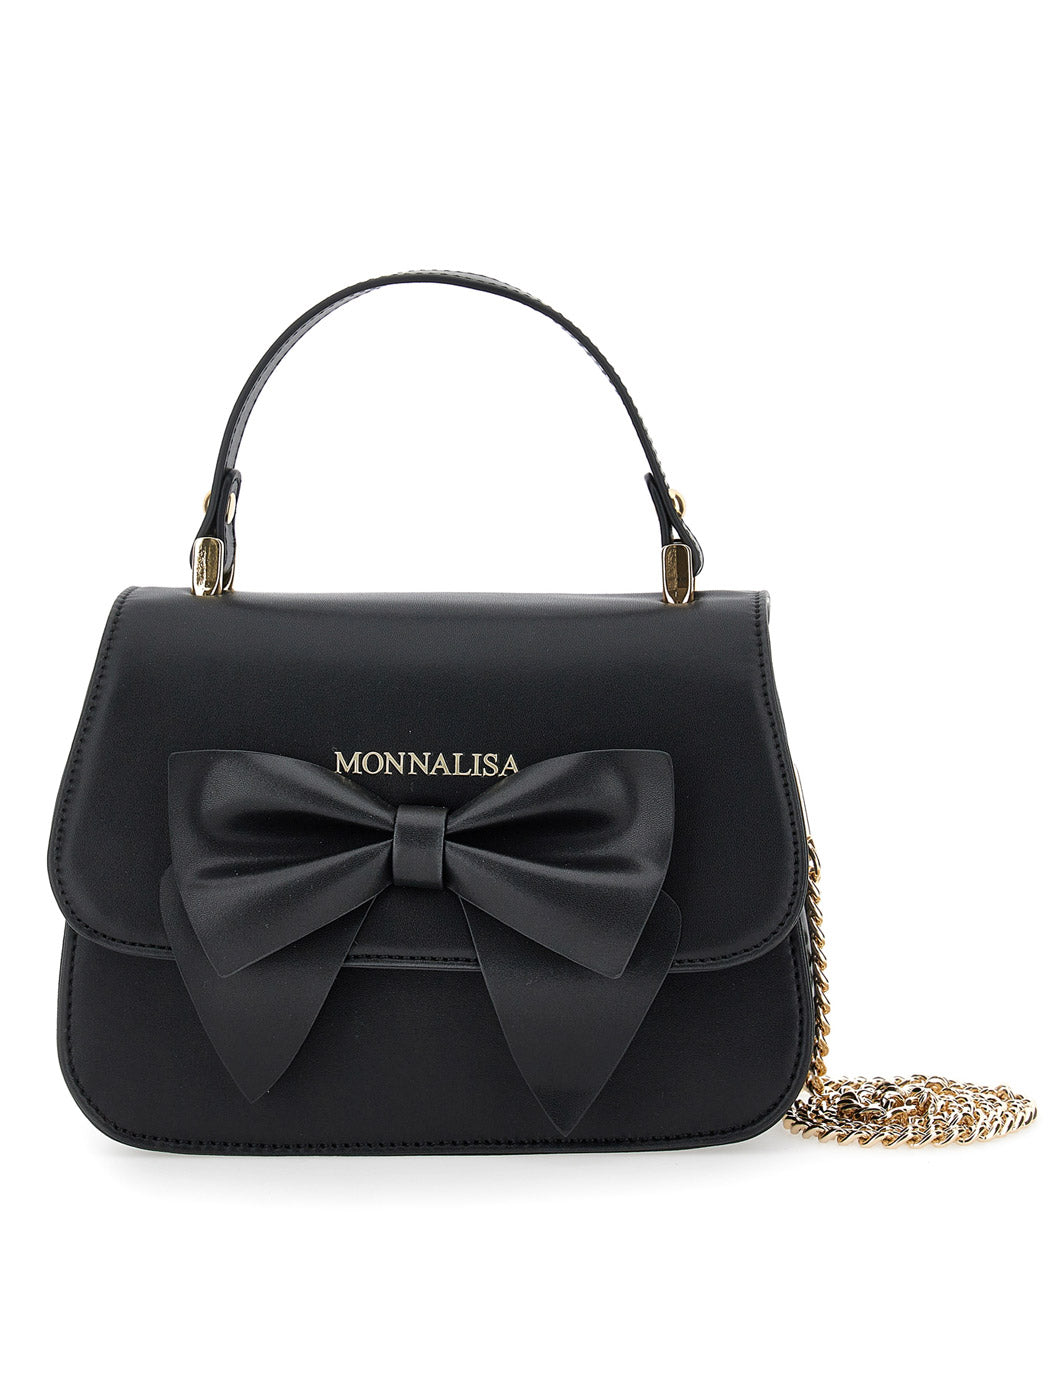 MONNALISA Black regenerated leather bag for girl-17B001